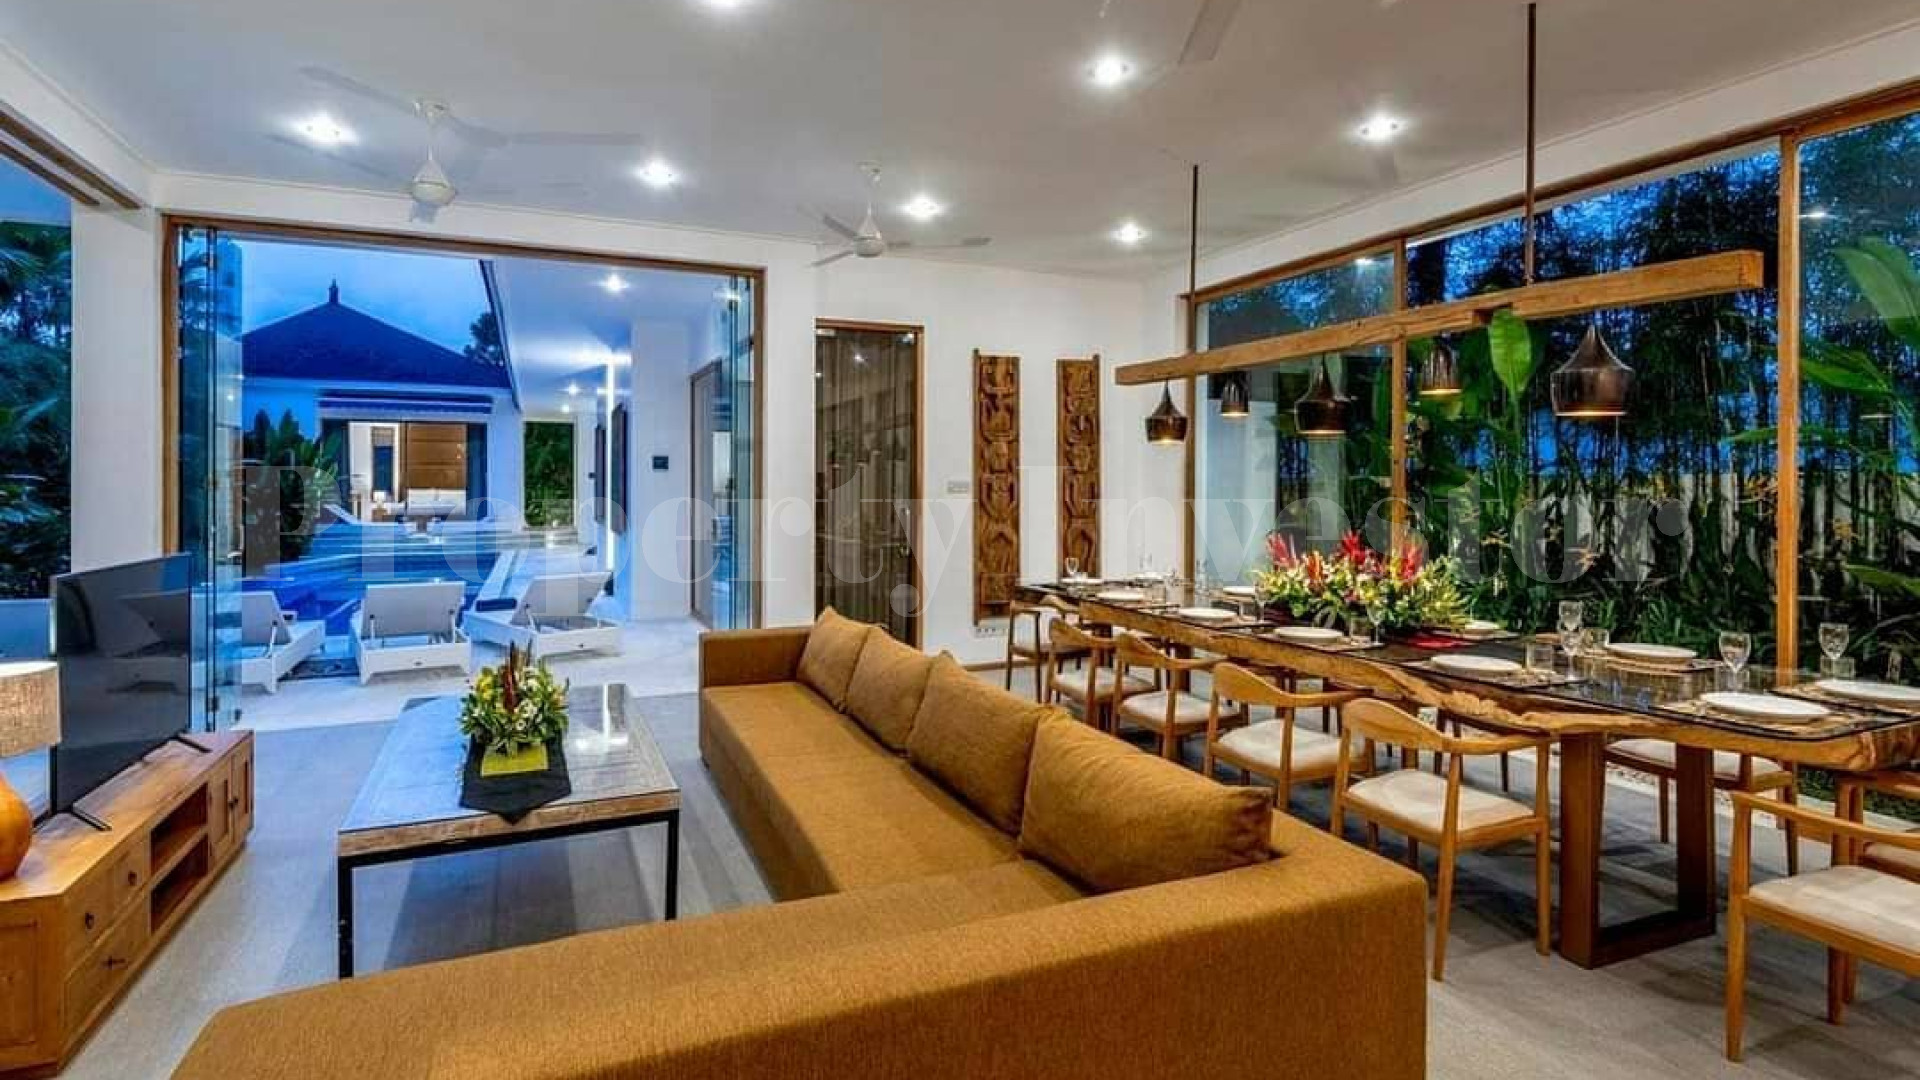 Elegant 5 Bedroom Contemporary Gated Community Villa for Sale in Canggu, Bali